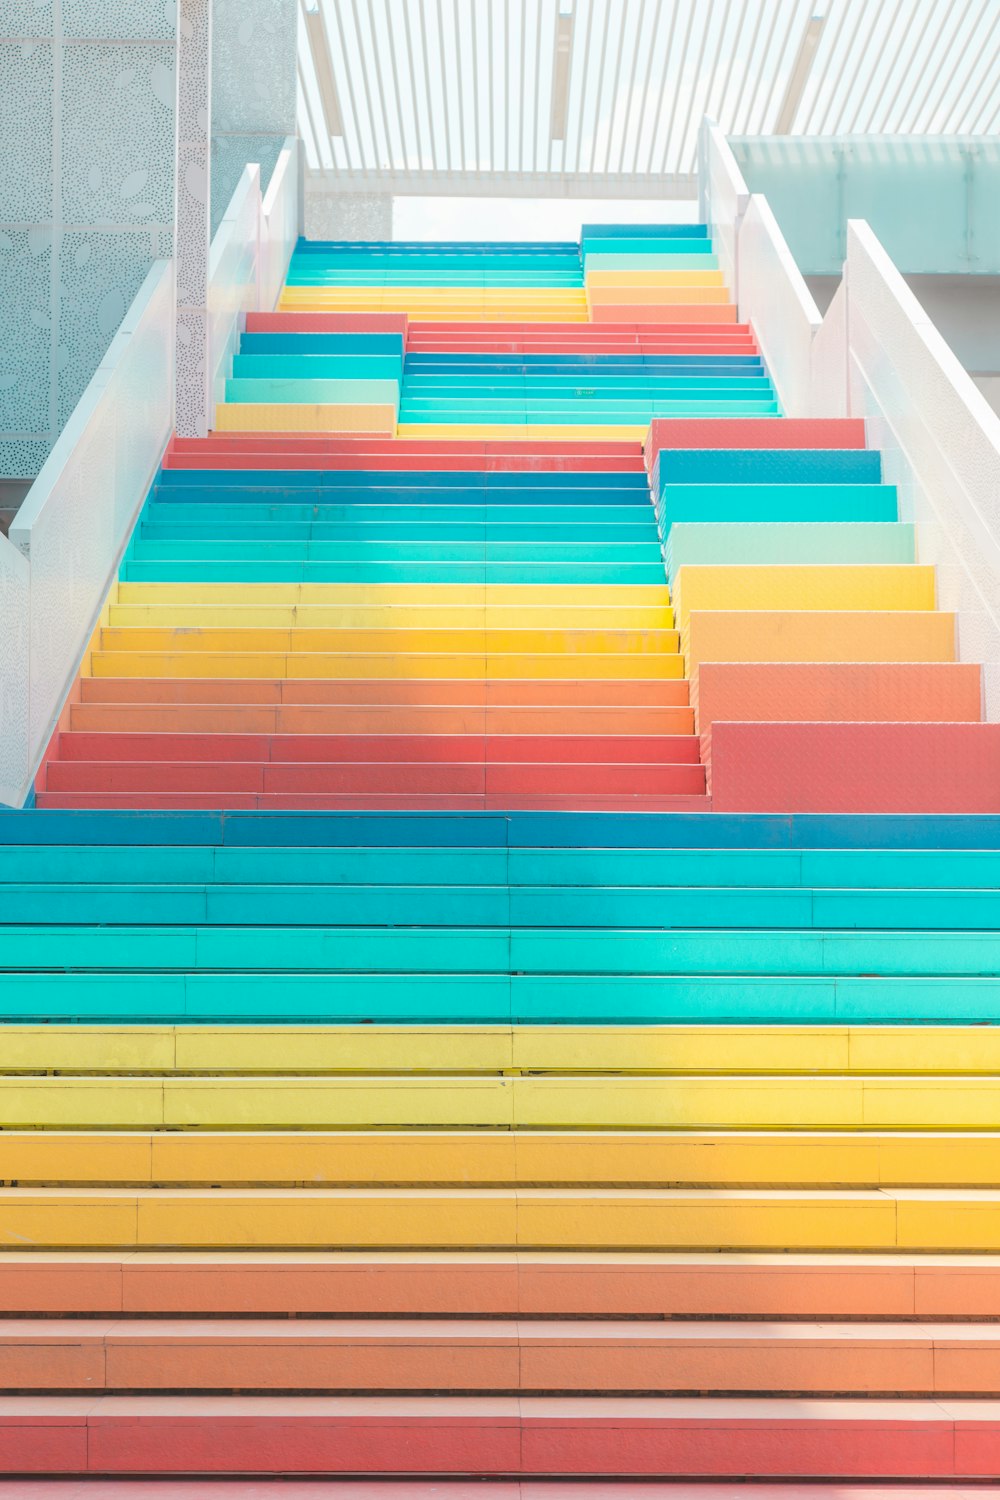 Escalier en béton bleu, jaune et blanc